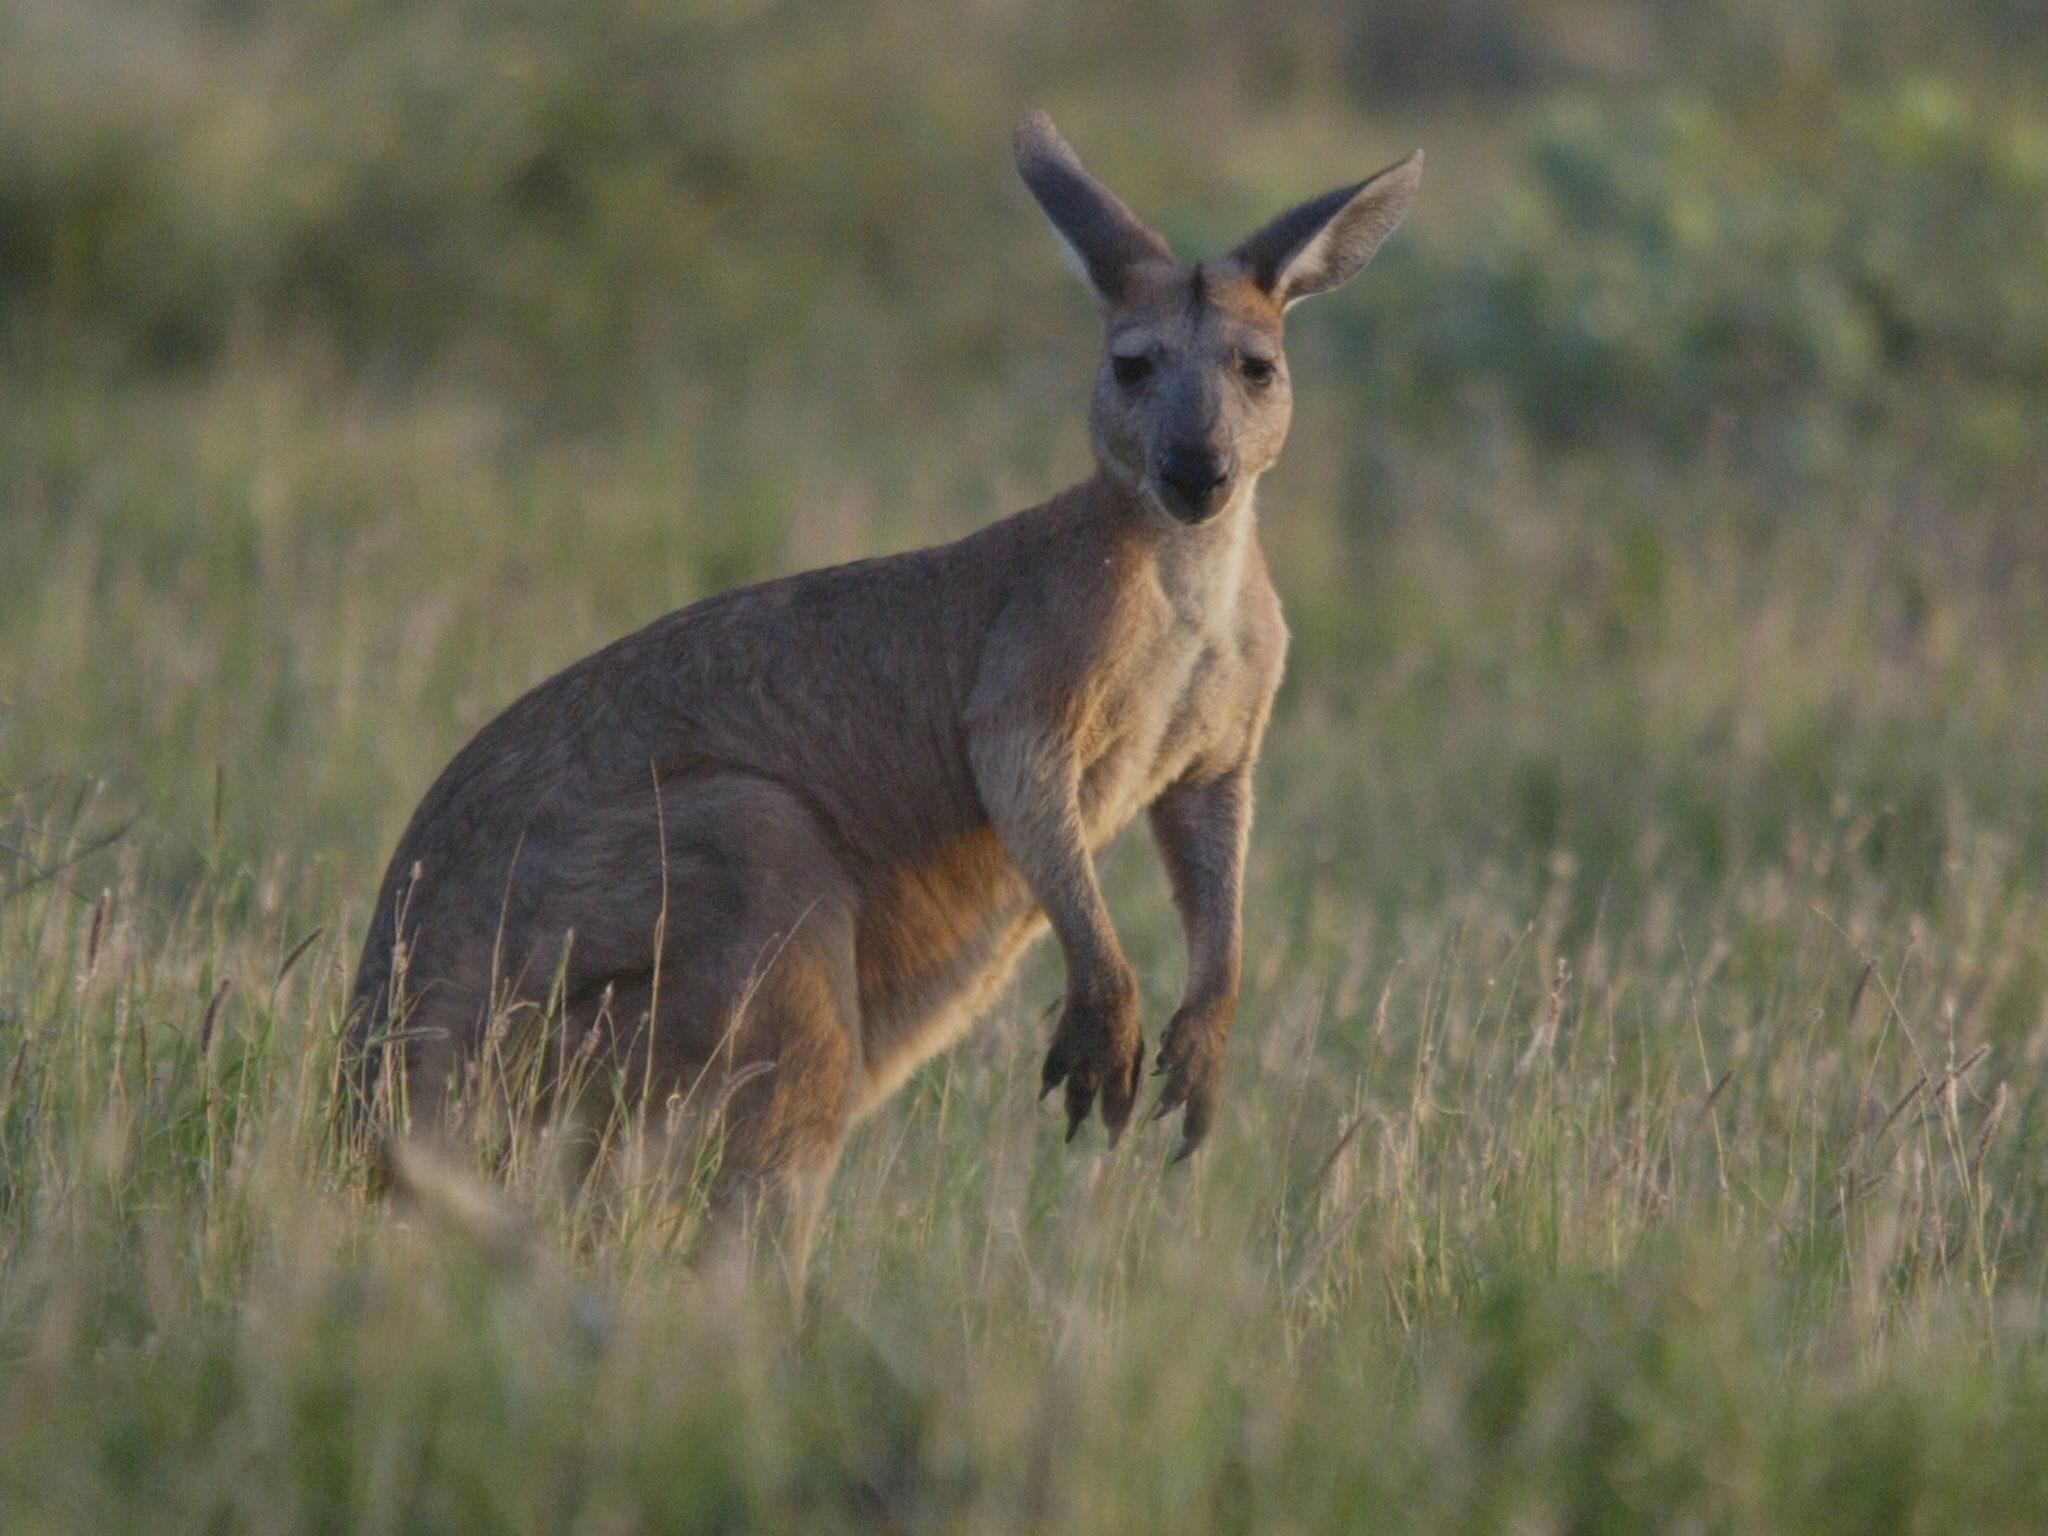 The kangaroo population in Australia is approaching 50 million